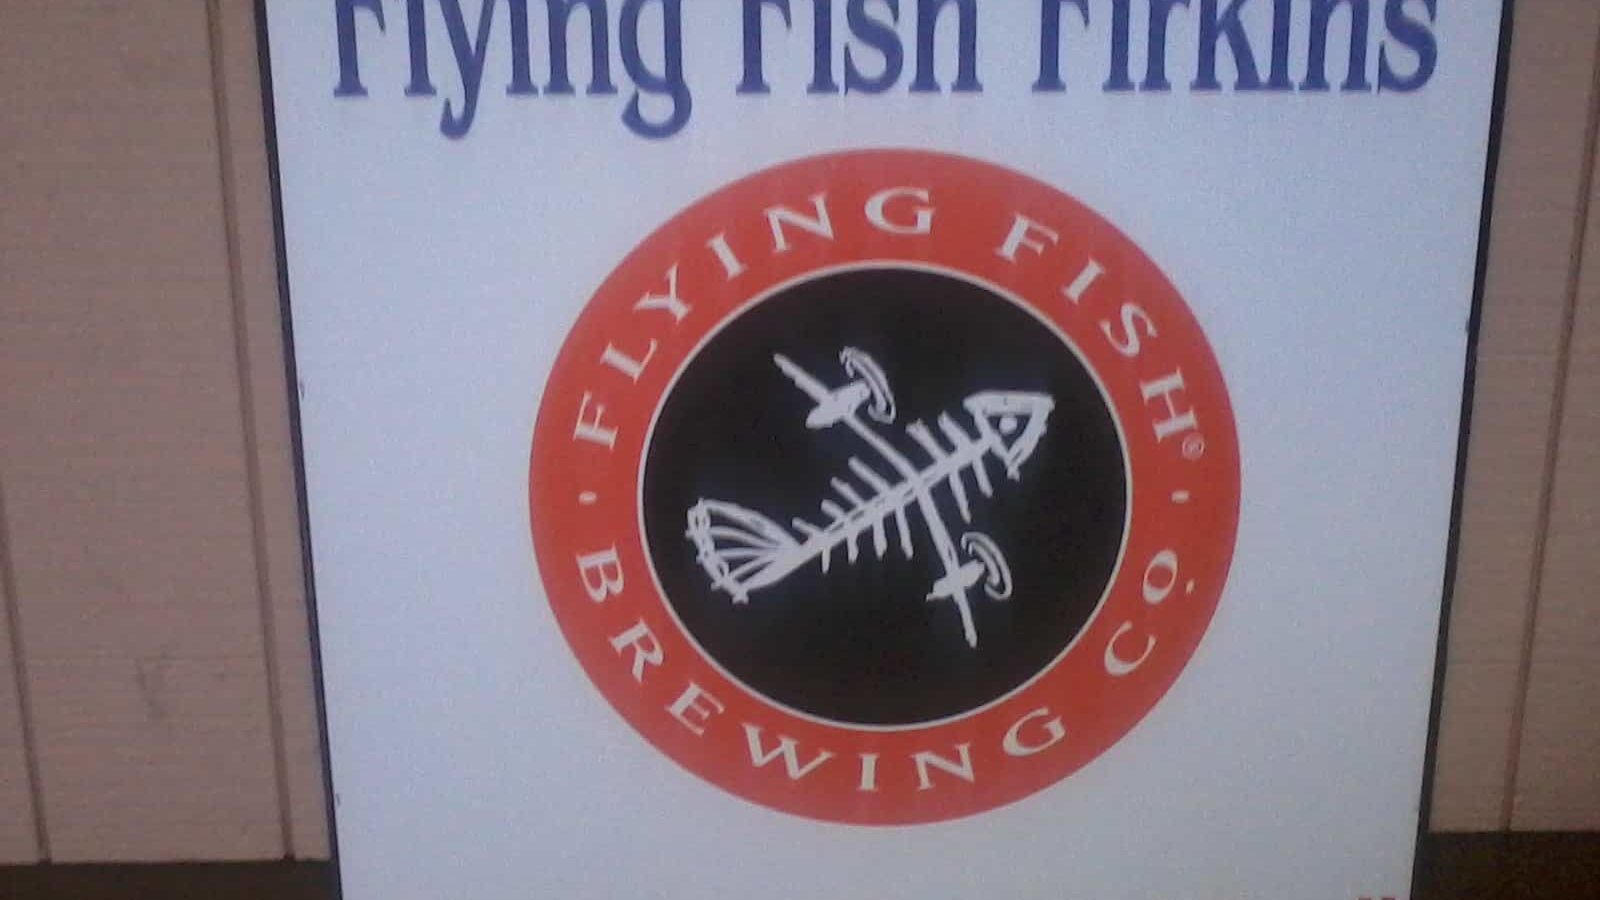 Flying Fish Firkins at Crest Tavern